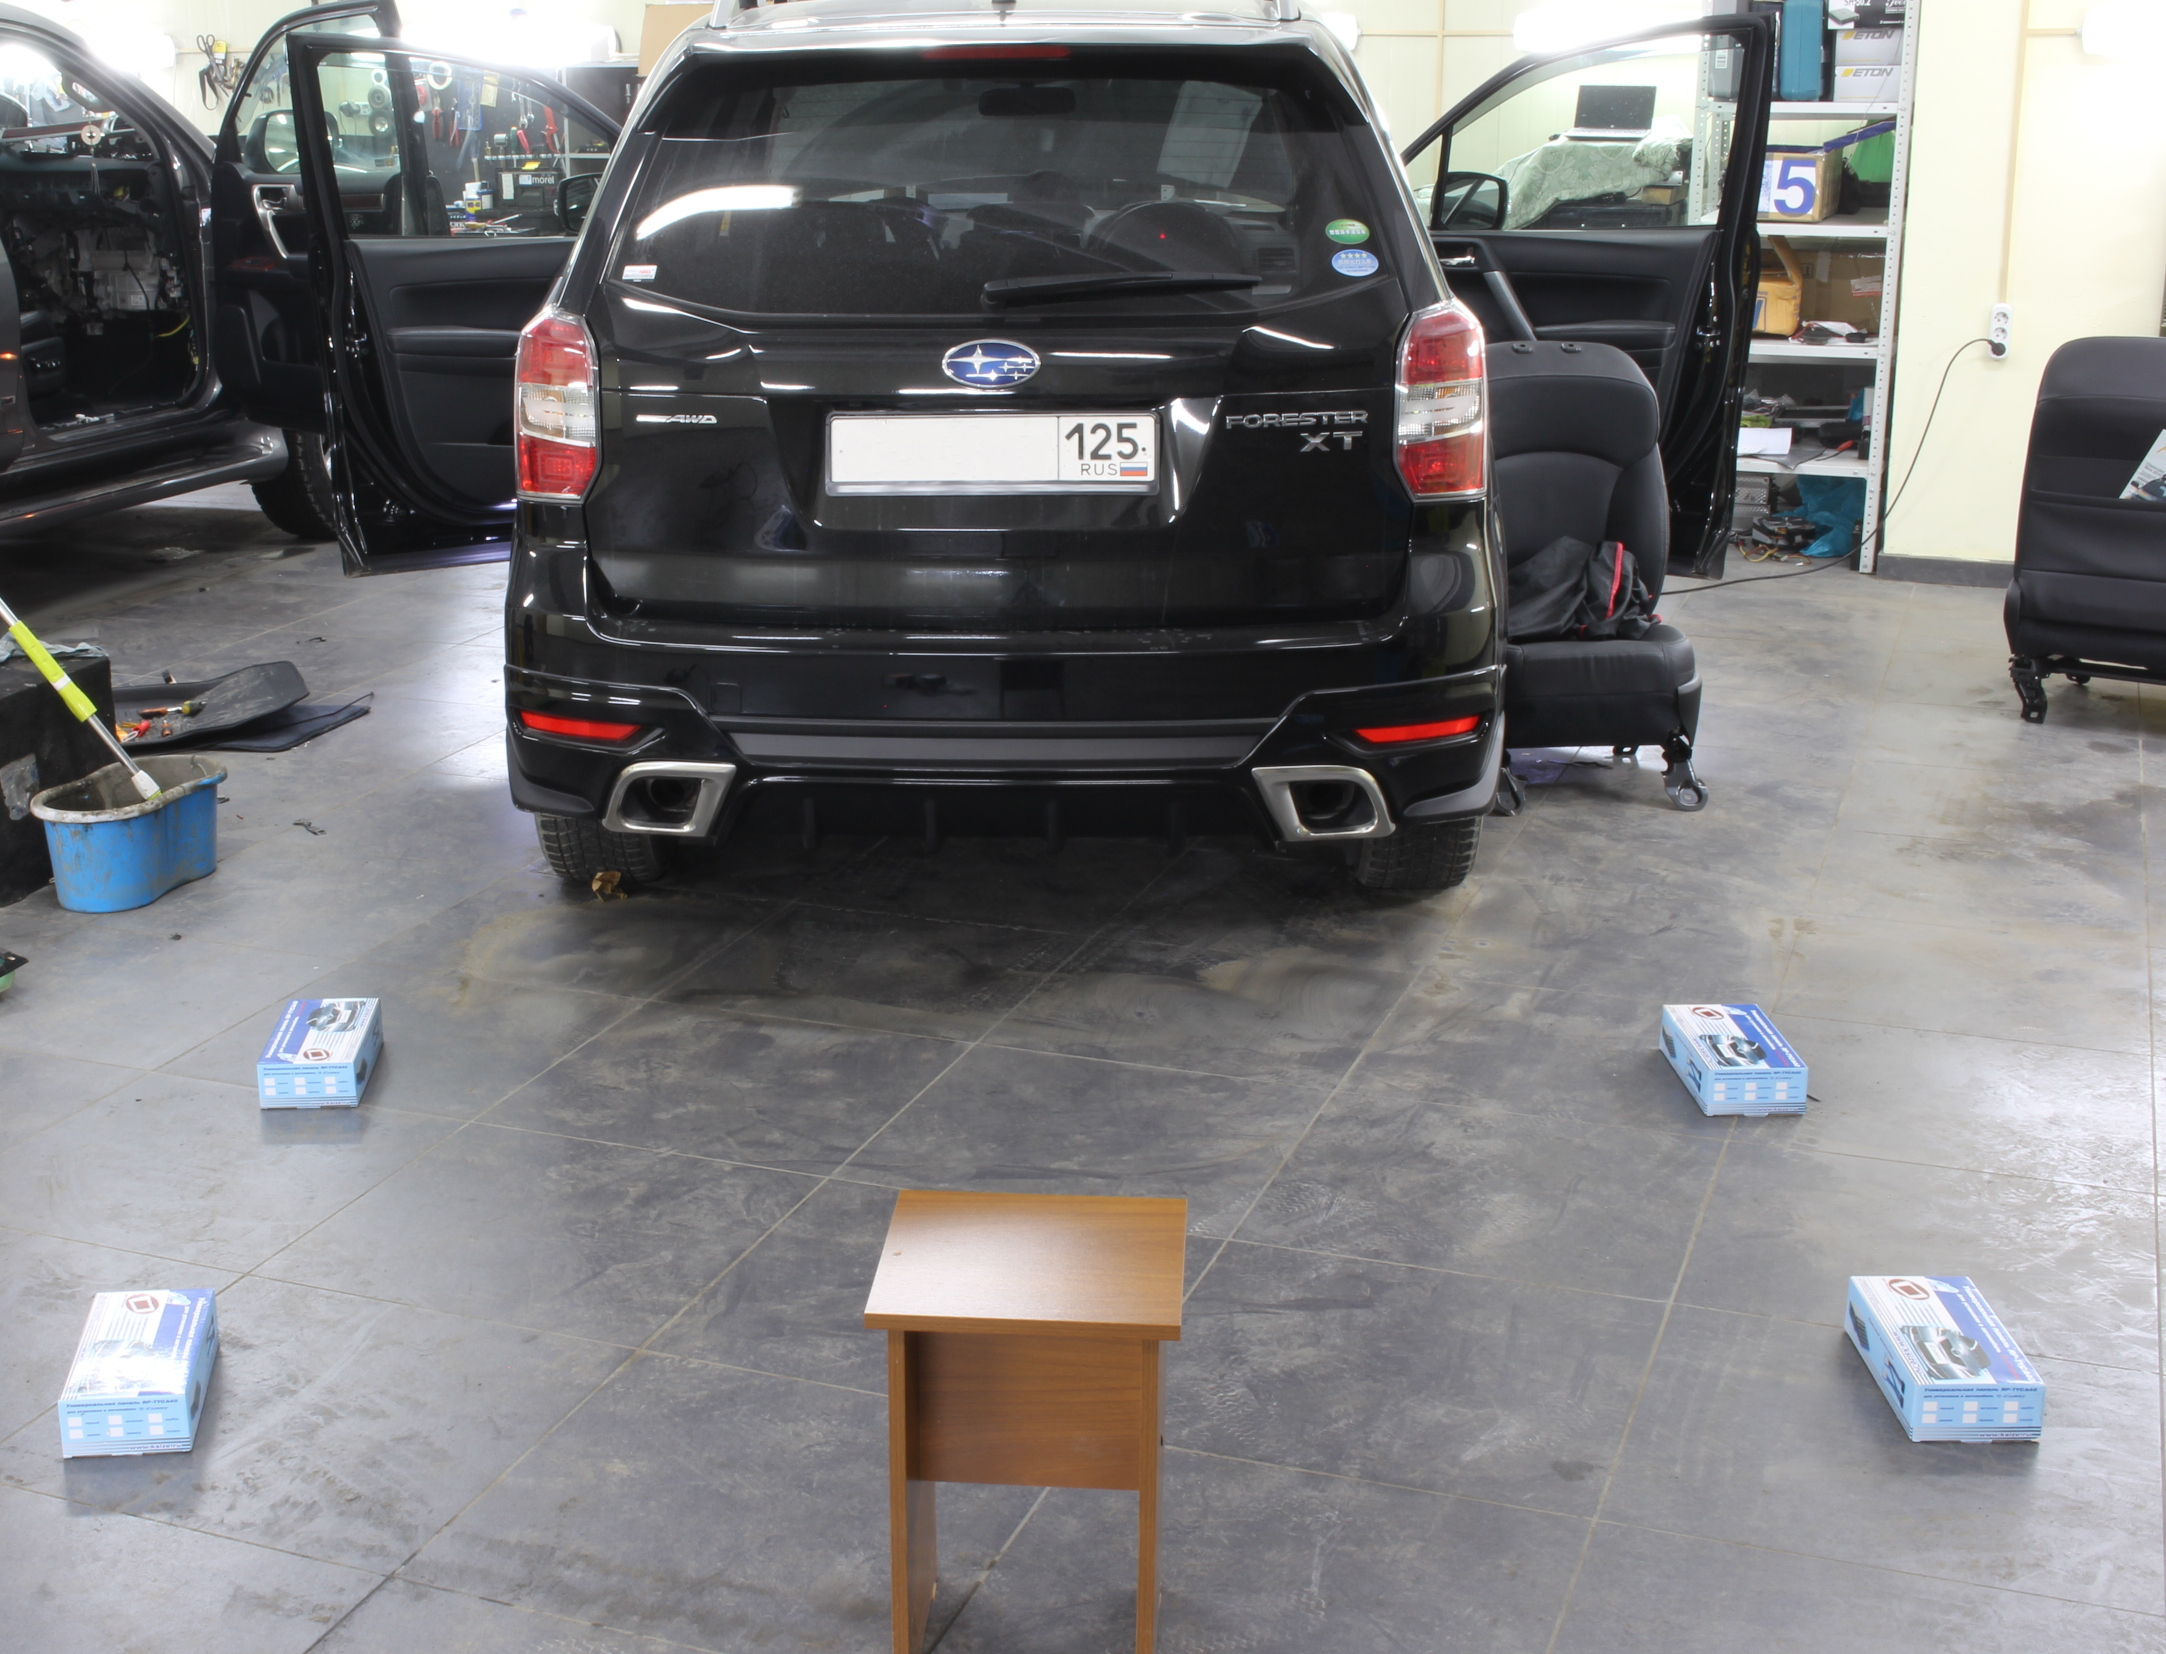 Subaru Forester SJ тест камер в магазине автозвука и аксессуаров kSize.ru
